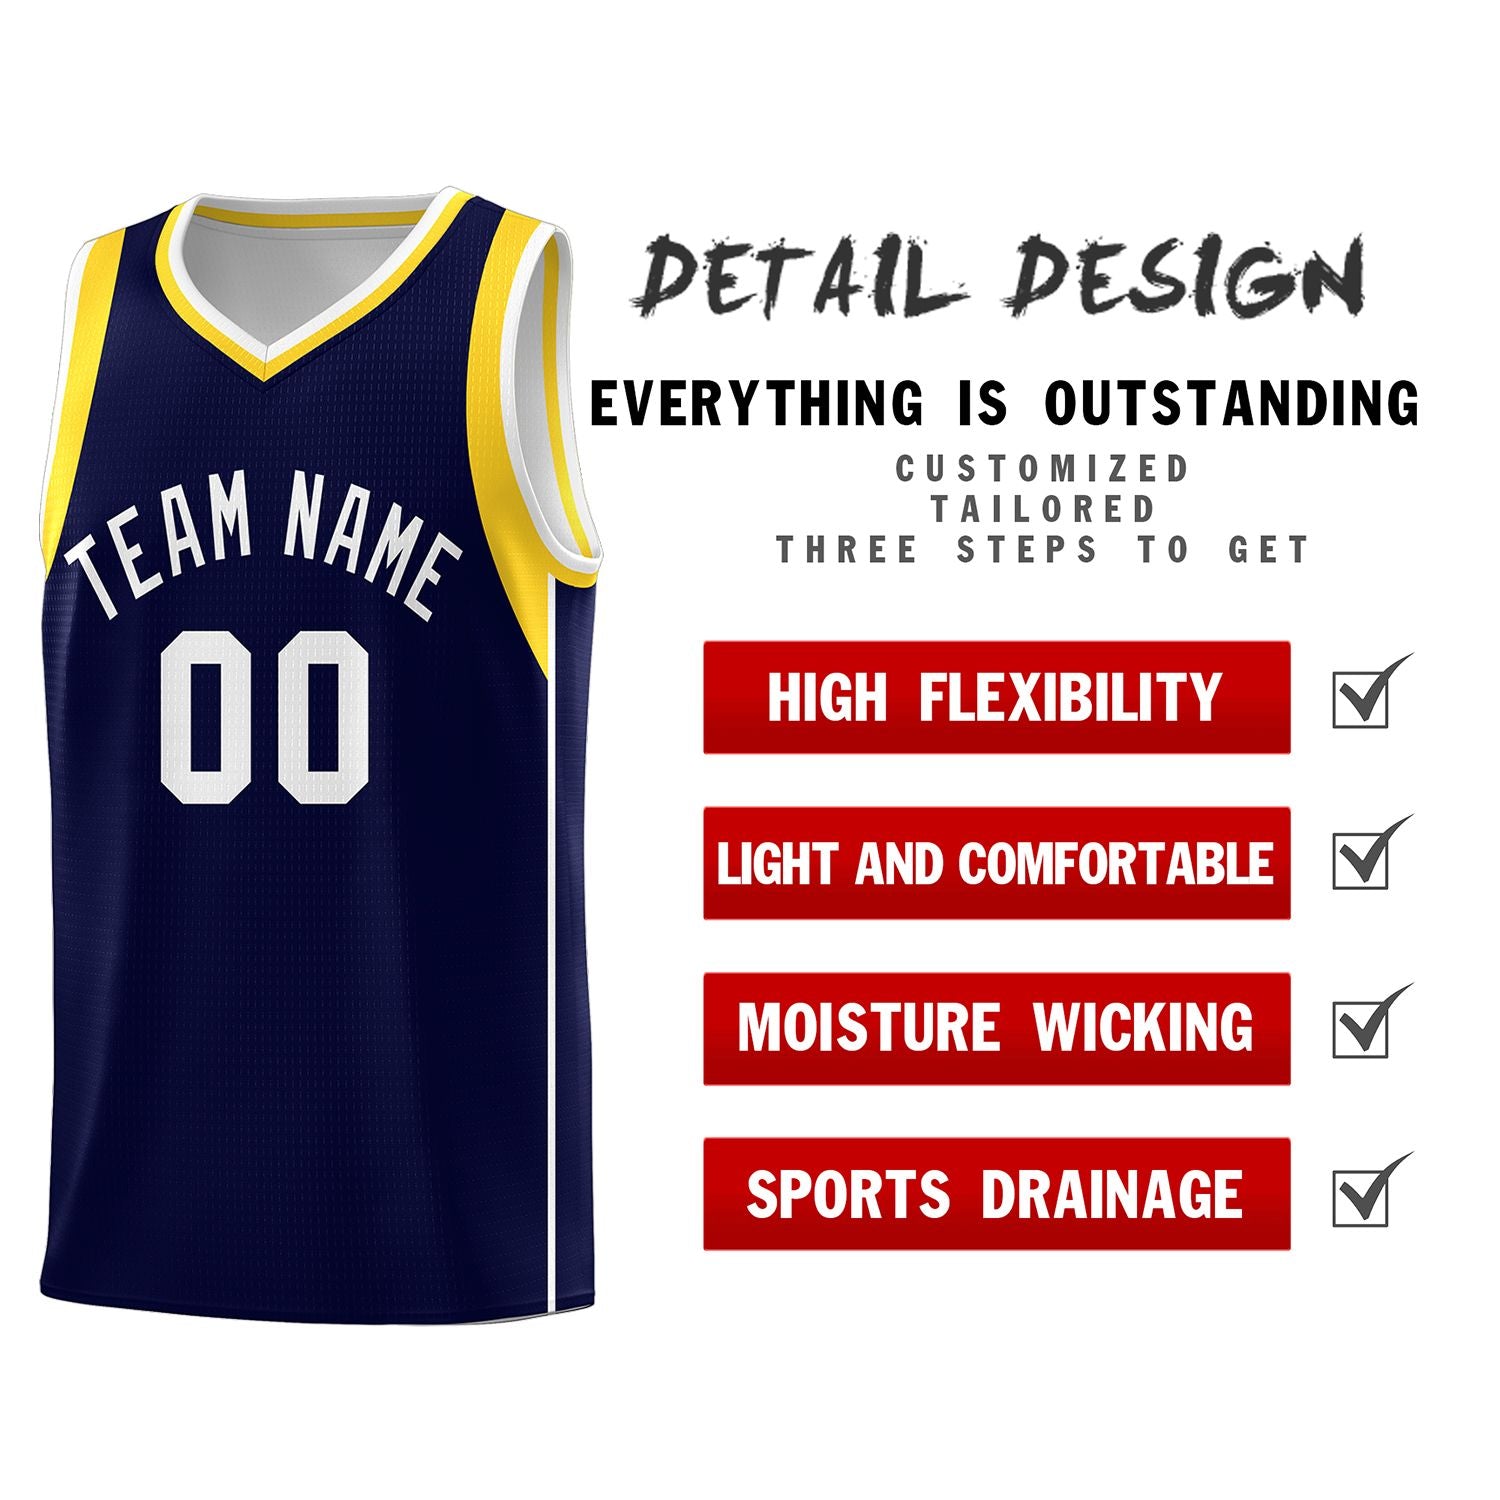 Custom Navy White-Gold Sleeve Colorblocking Classic Sports Uniform Basketball Jersey